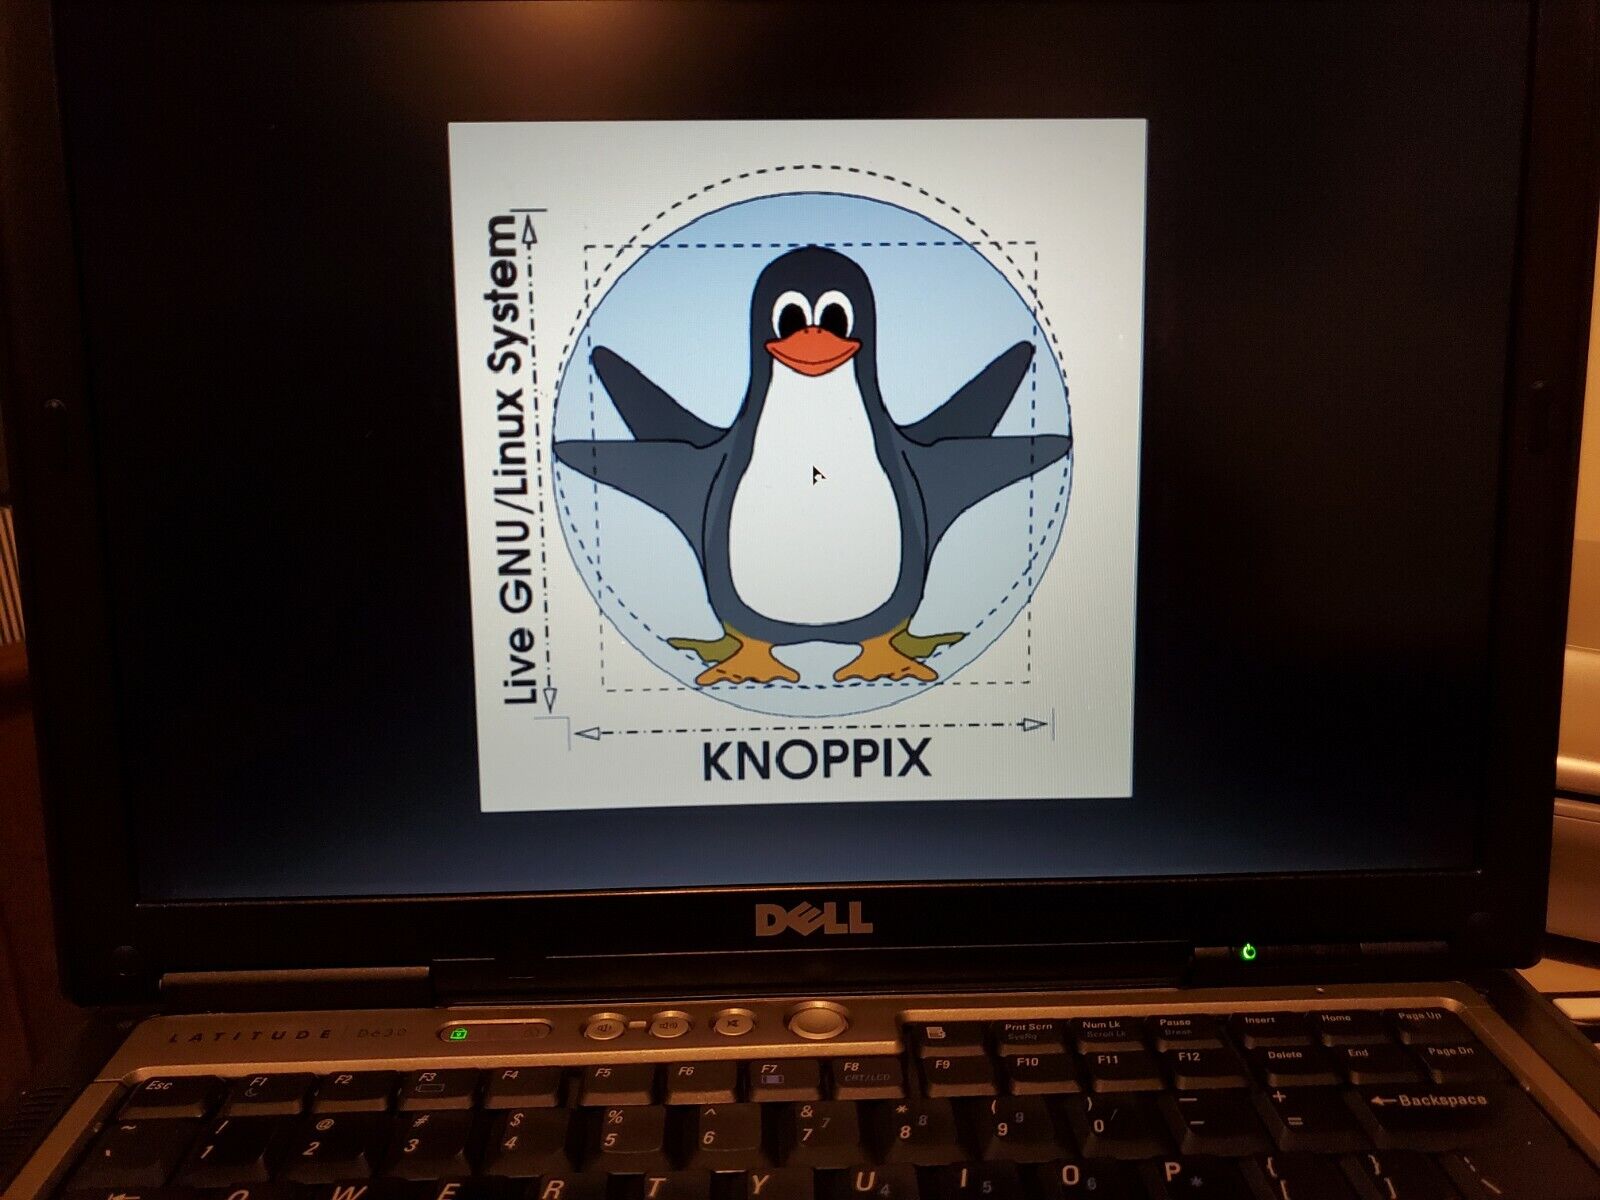 Knoppix Linux Bootable OS v8.6 "Original Live Operating System" 32G USB  Stick for Sale - Knoppix.net